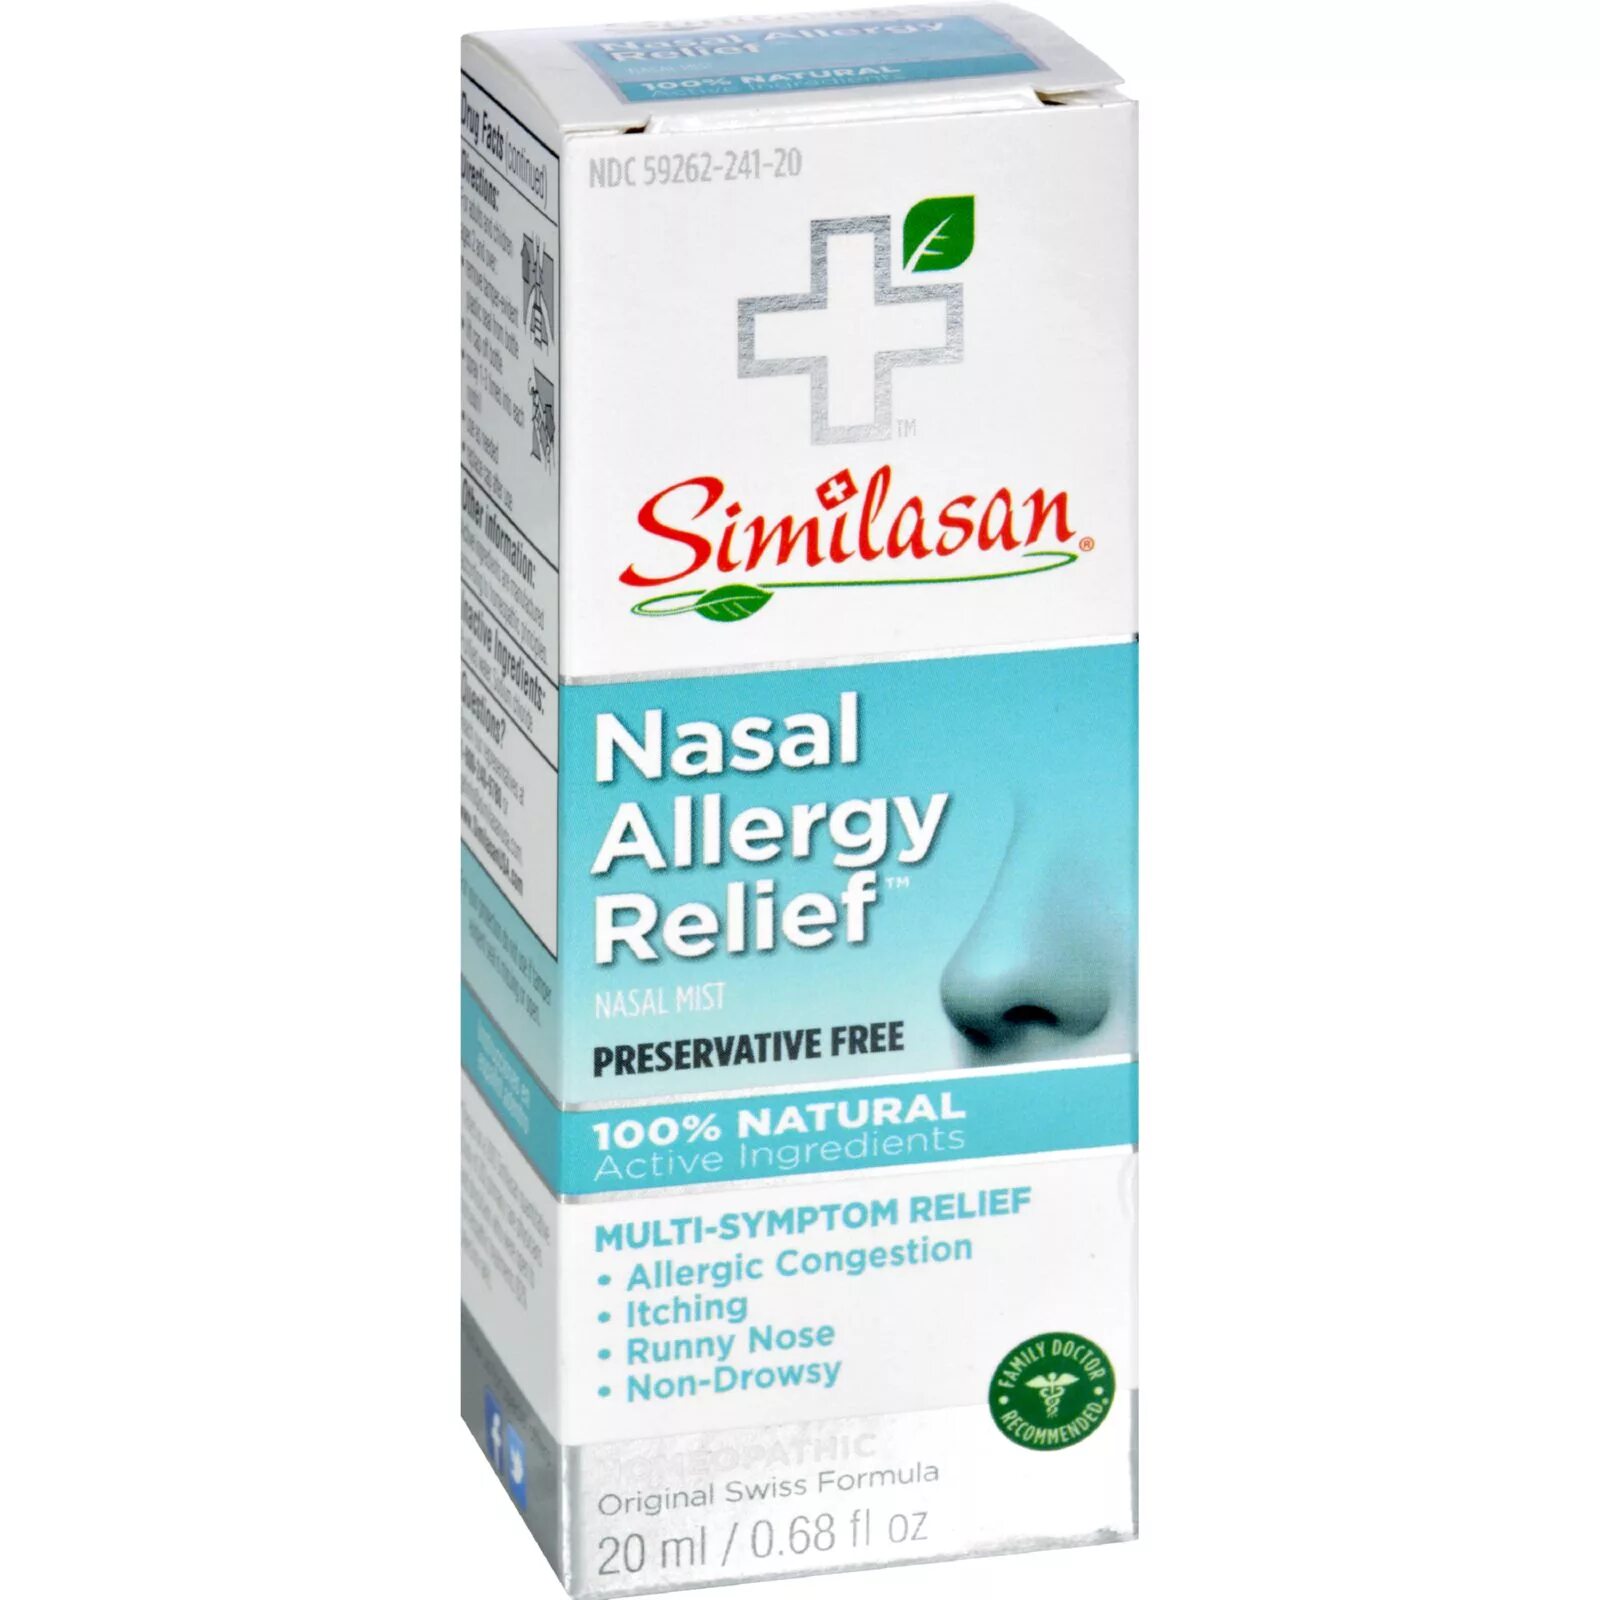 Nasal Allergy Relief. Allergy джиайдл. Allergy Relief инструкция. Nasal Relief .инструкция.